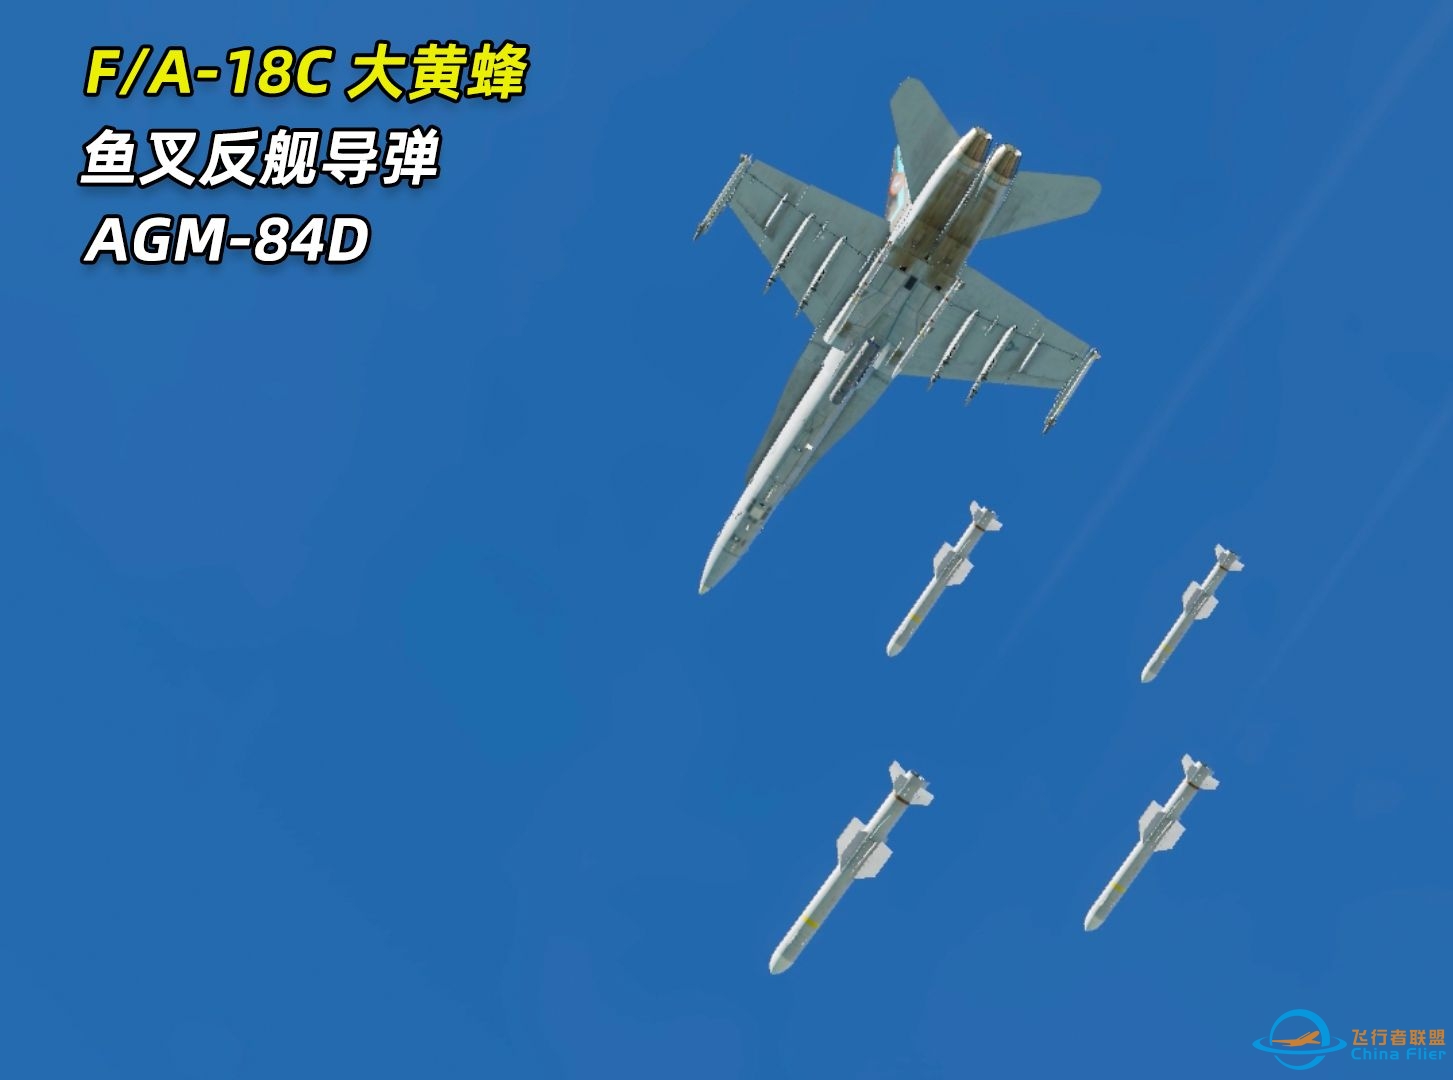 dcs world F/A18-C大黄蜂鱼叉反舰导弹 AGM84D（BOL模式）-33 